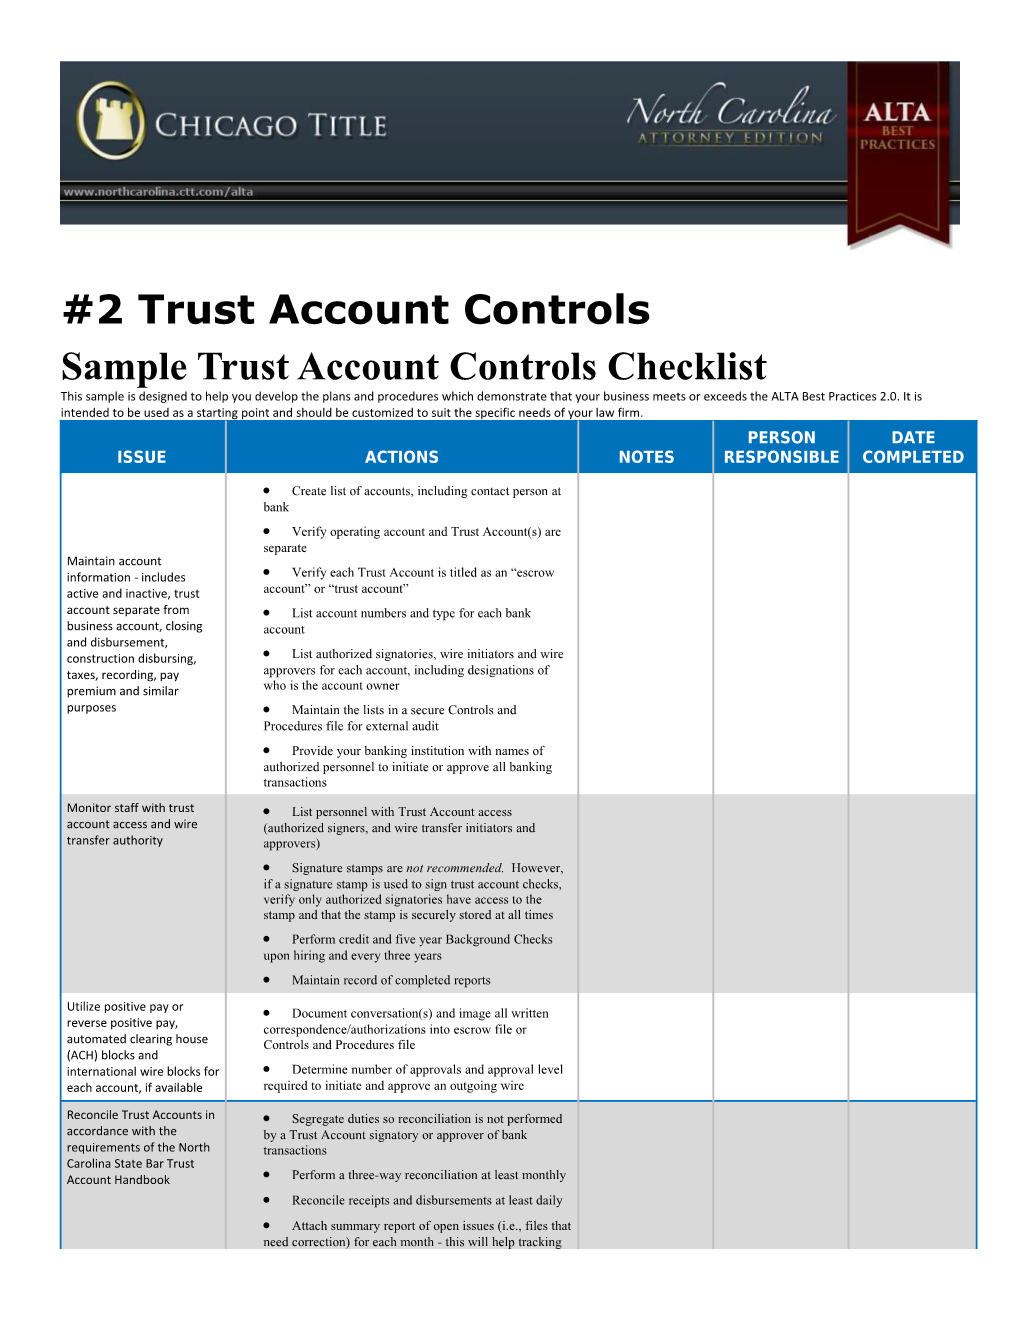 Sample Trust Account Controls Checklist